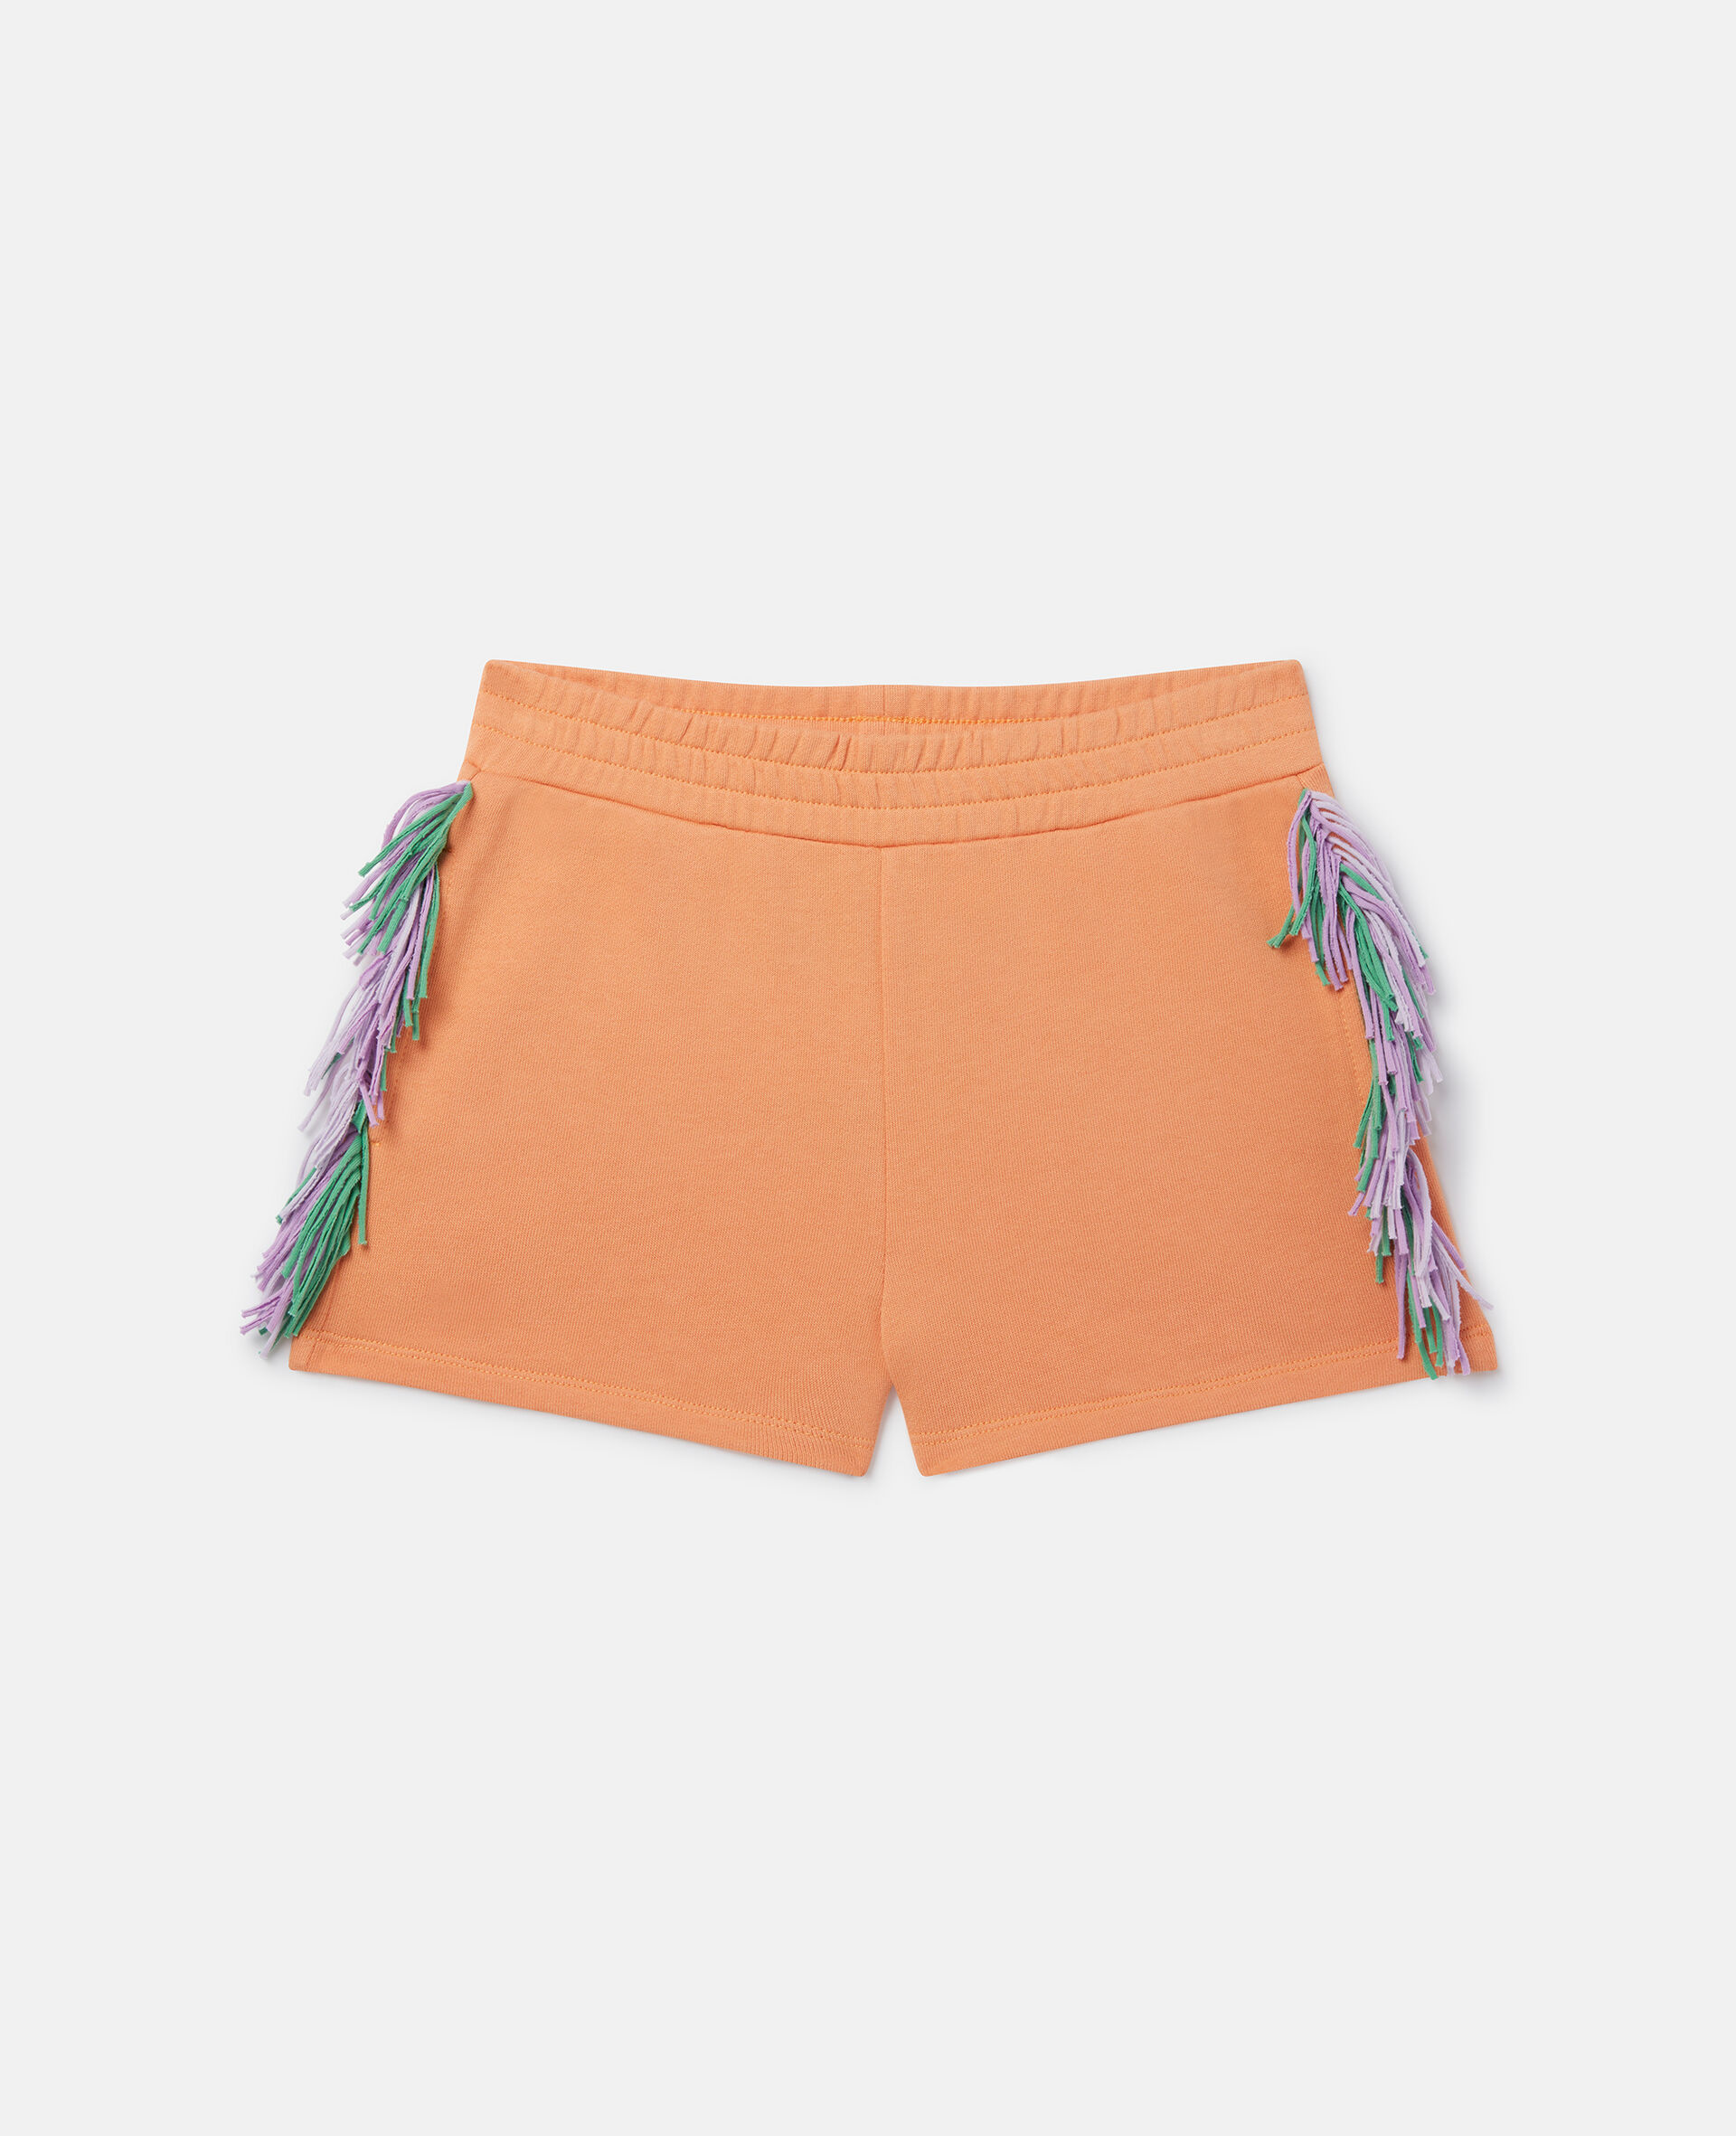 Pantaloncini con frange-Arancione-large image number 0